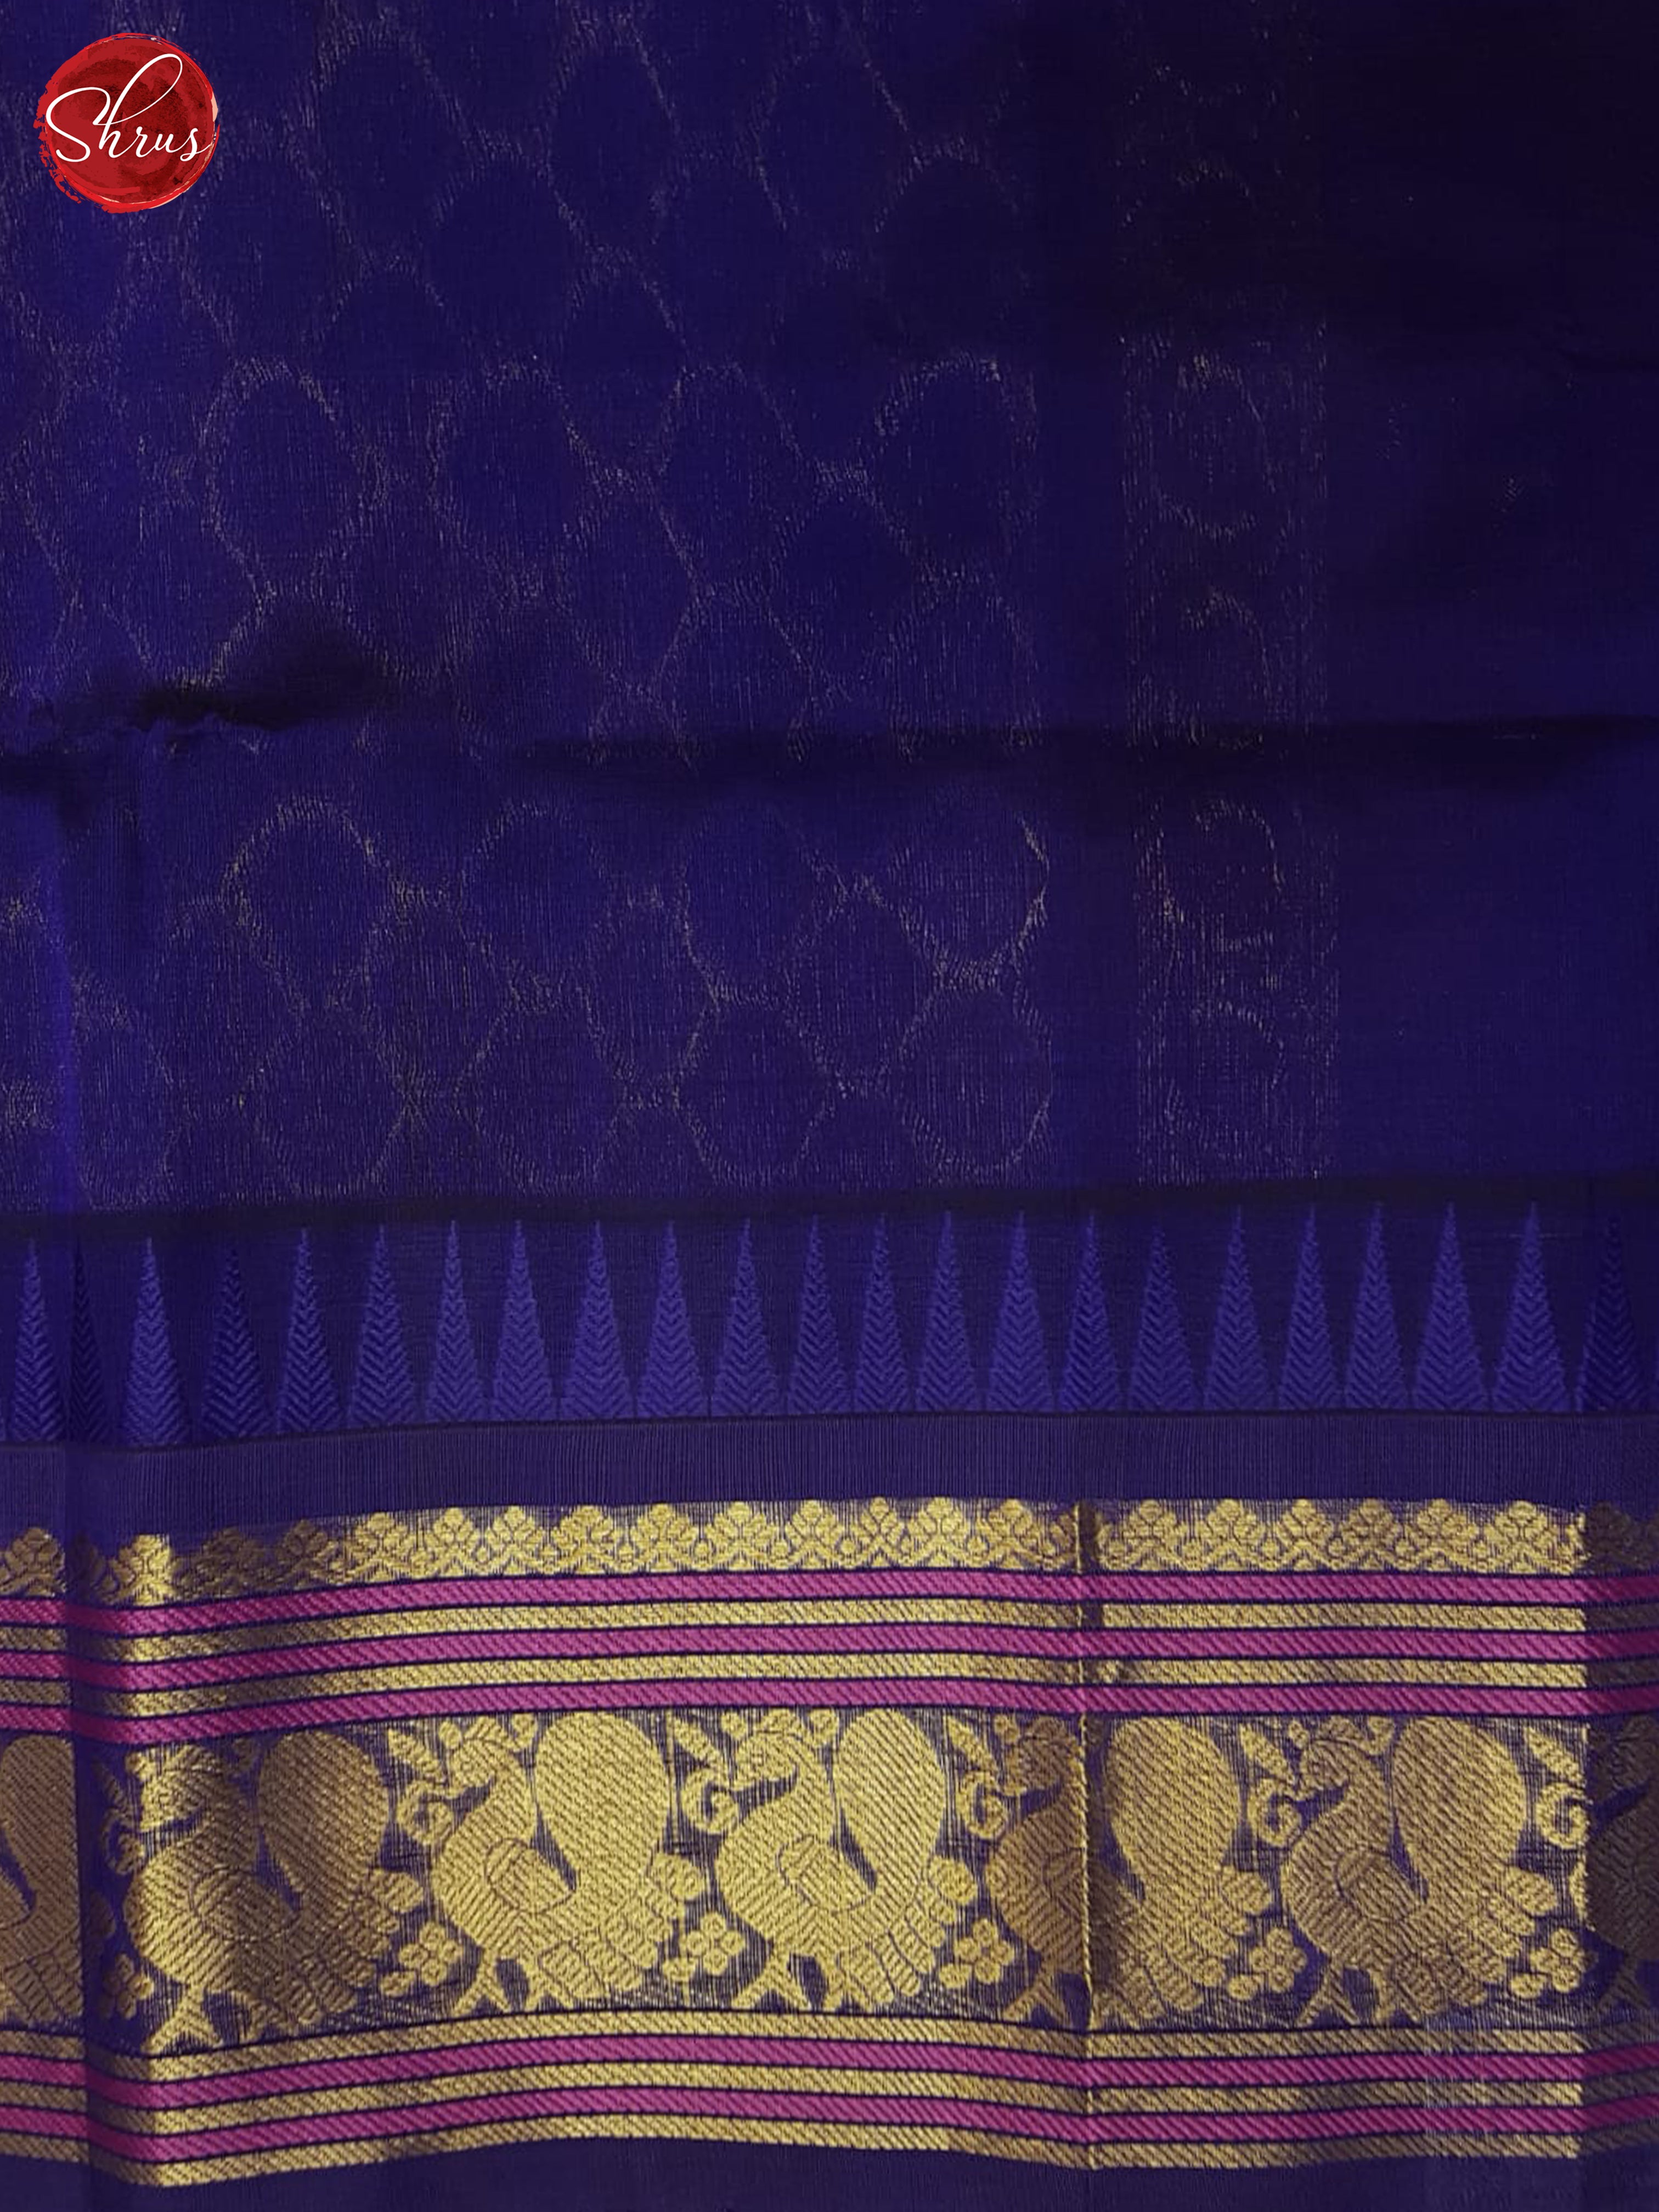 Green And Purple-Silk cotton saree - Shop on ShrusEternity.com